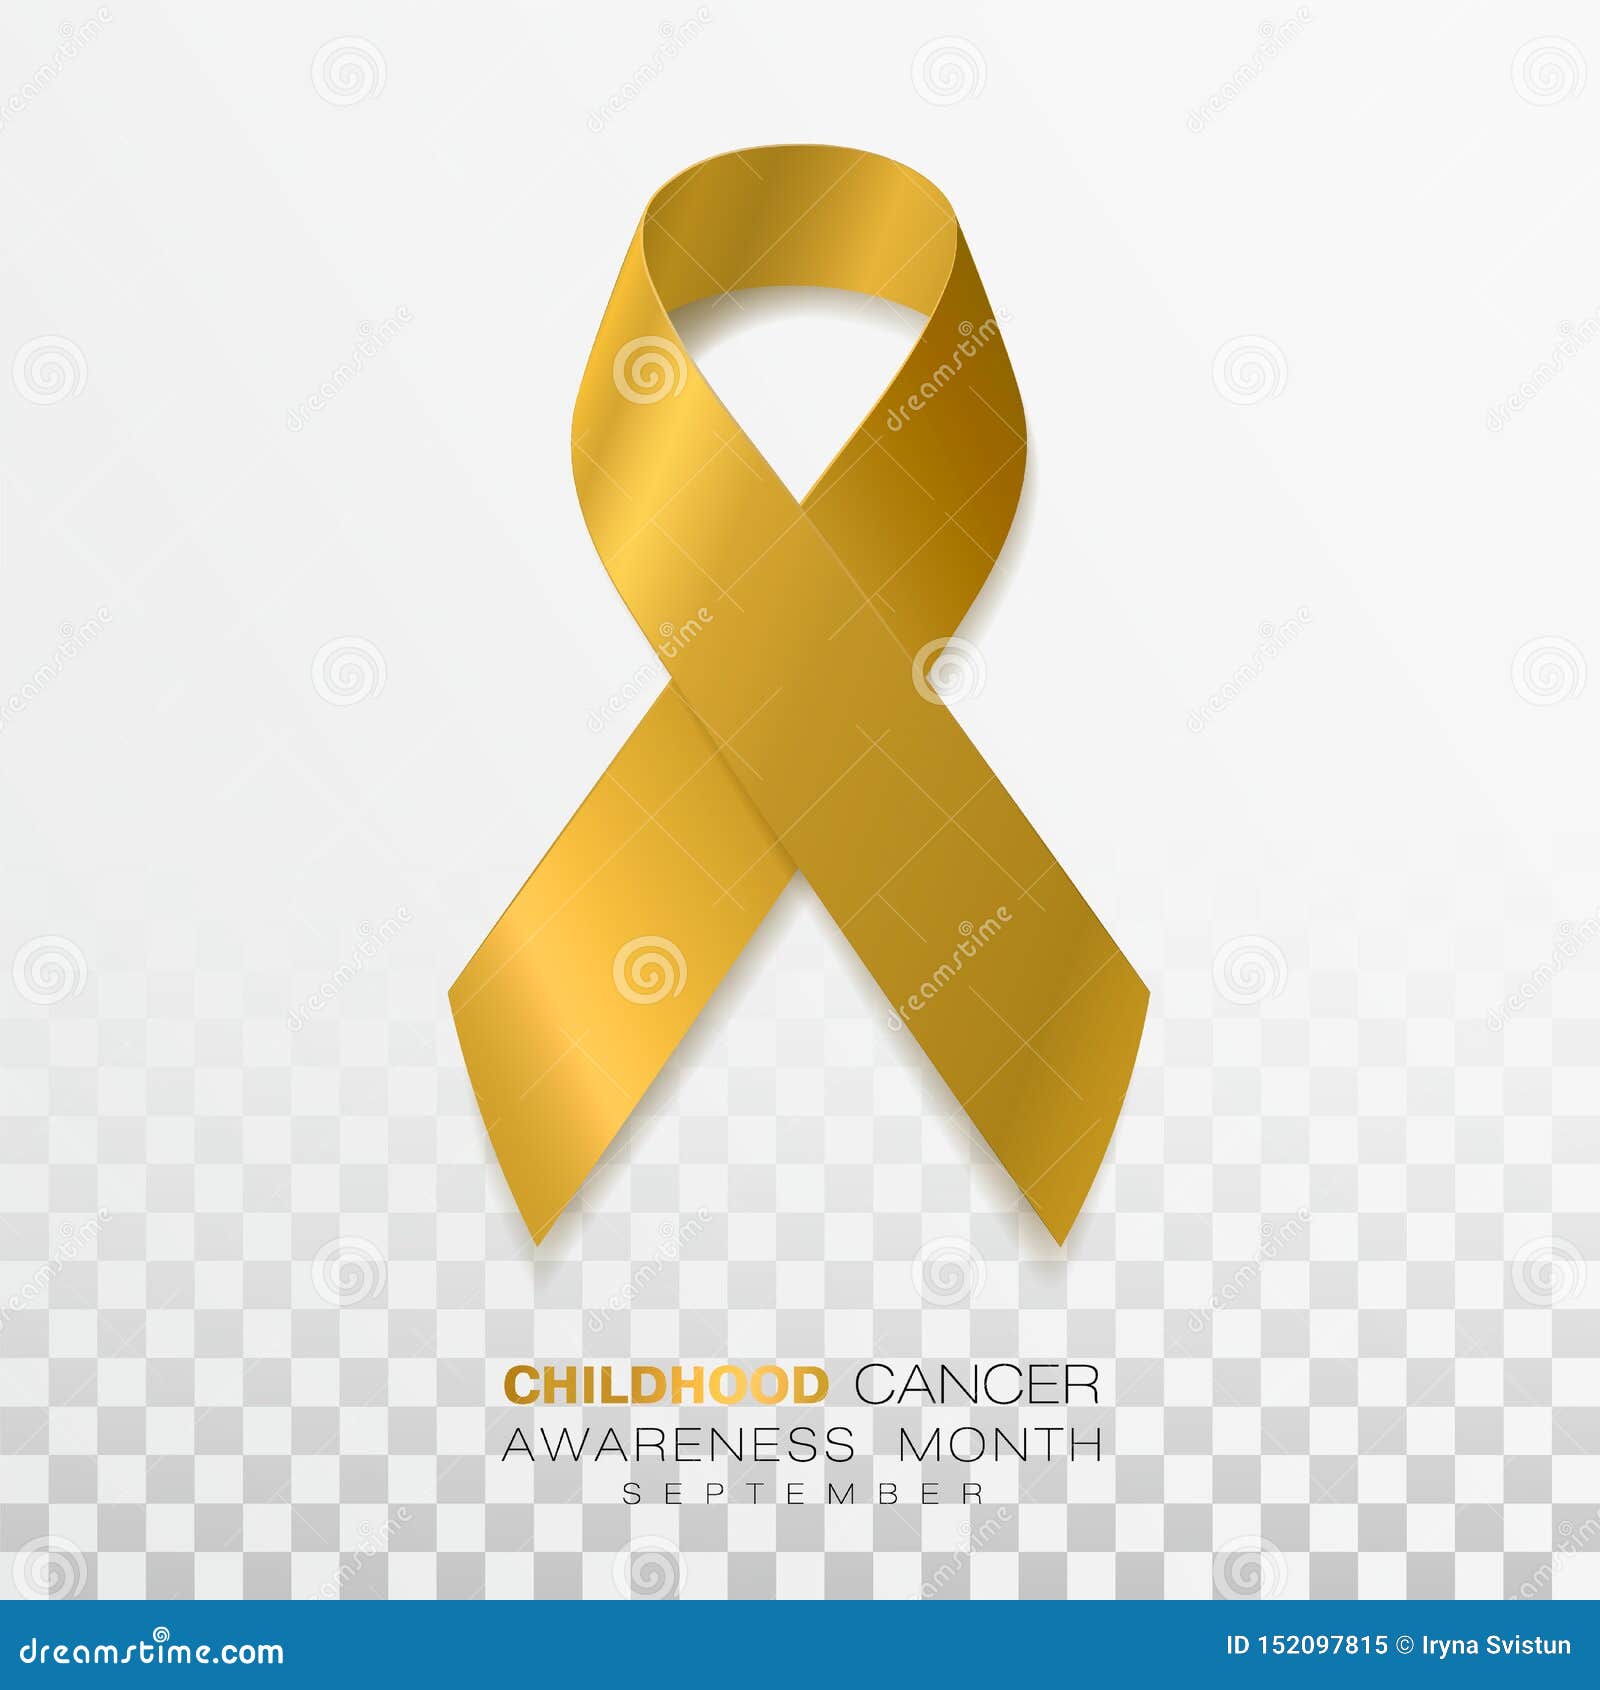 childhood cancer awareness month. gold color ribbon  on transparent background.   template for